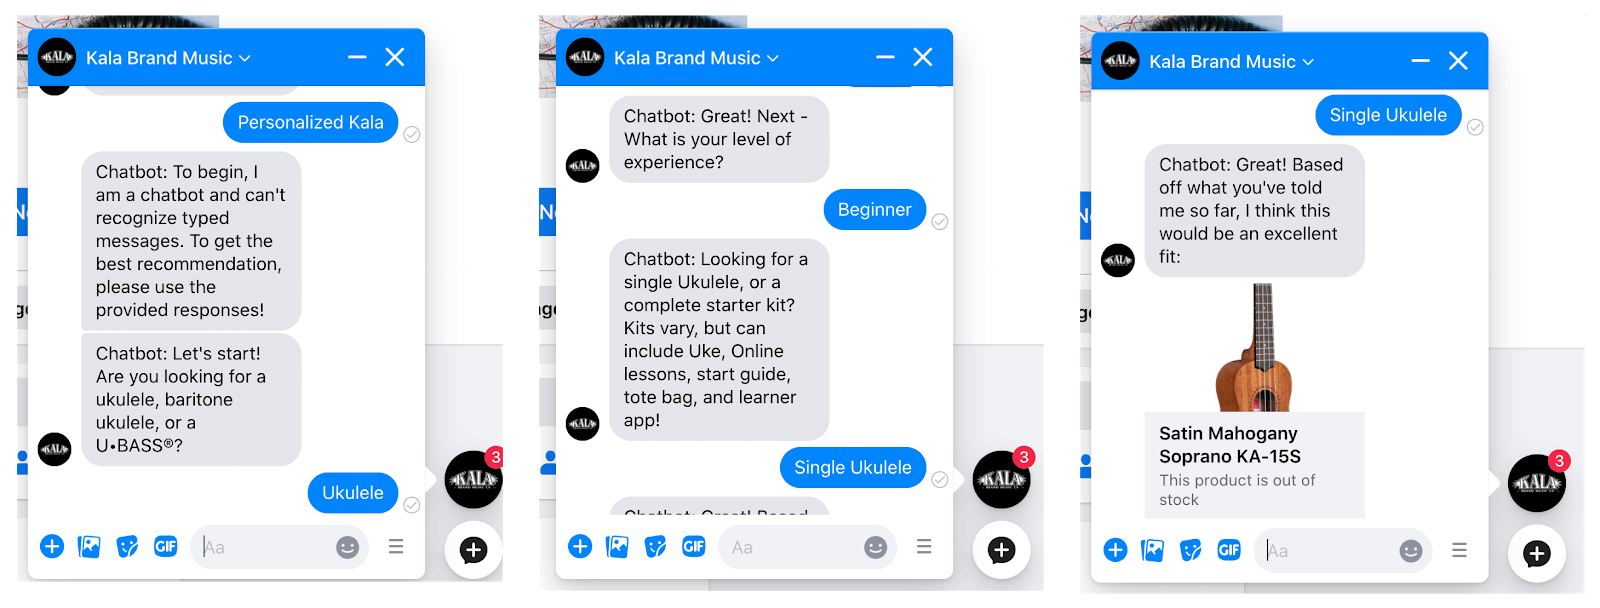 Fb messenger live chat tutorial